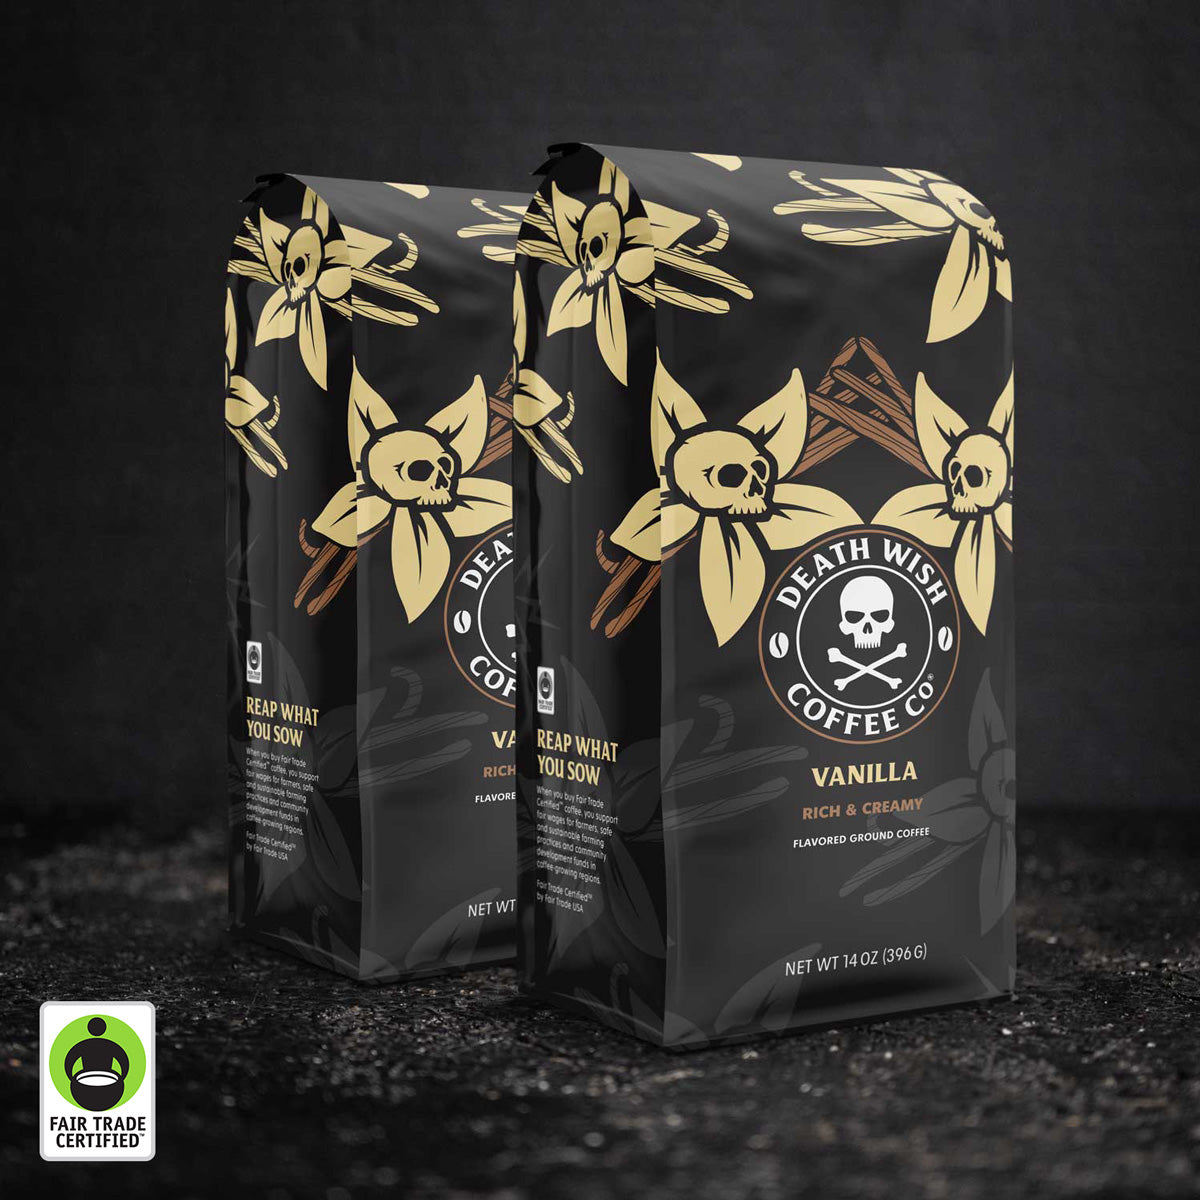 Death Wish Coffee Vanilla Flavored Ground Coffee - 2 Bags